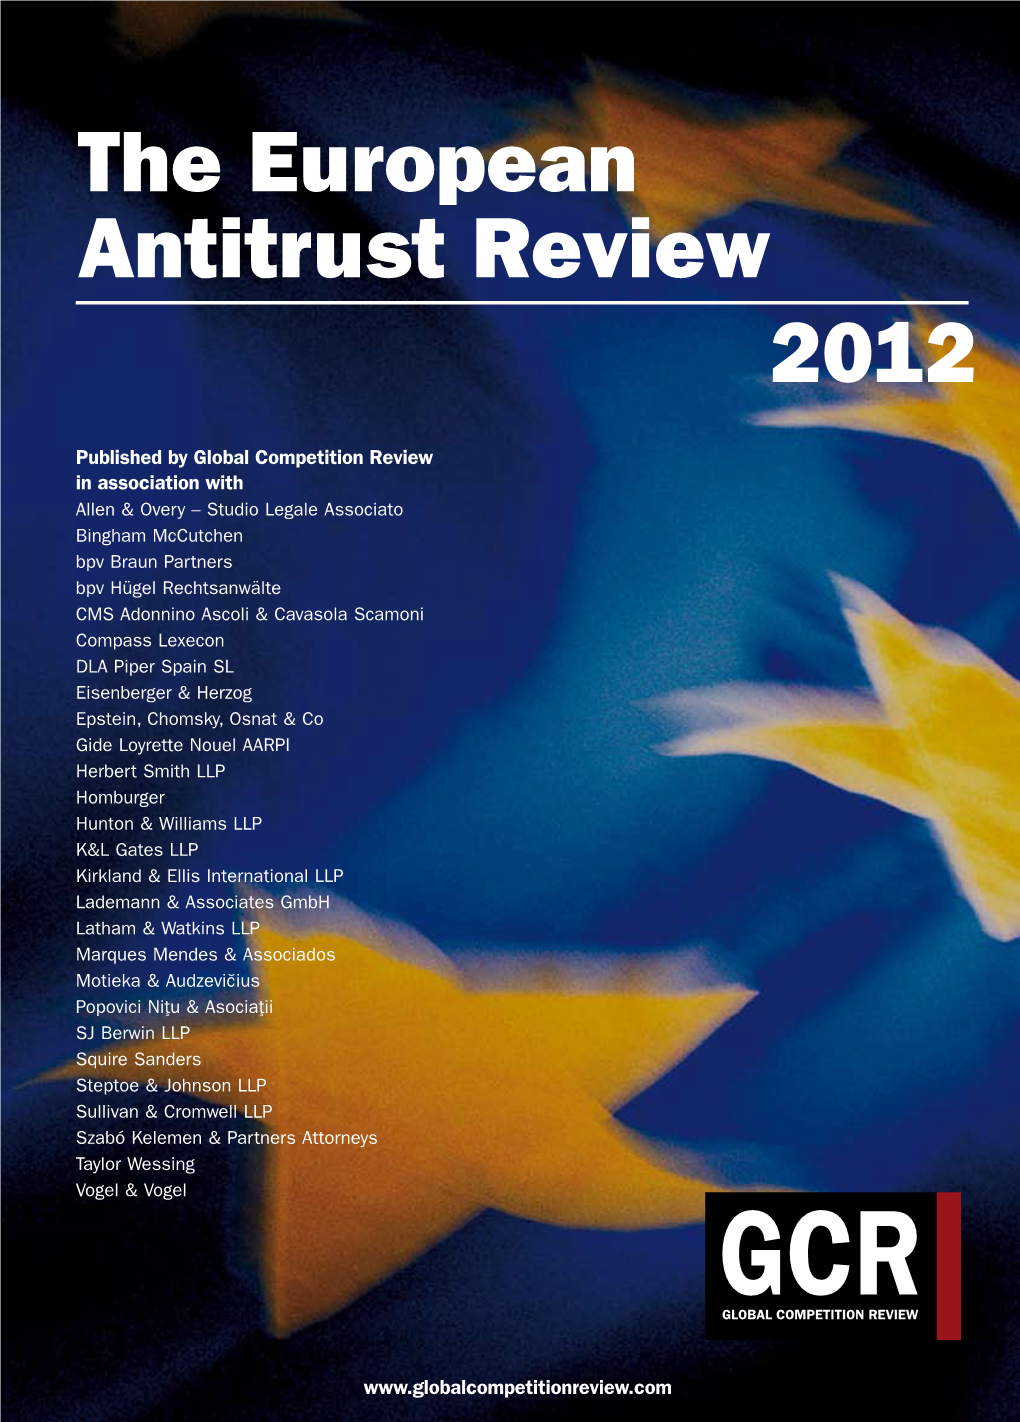 The European Antitrust Review 2012